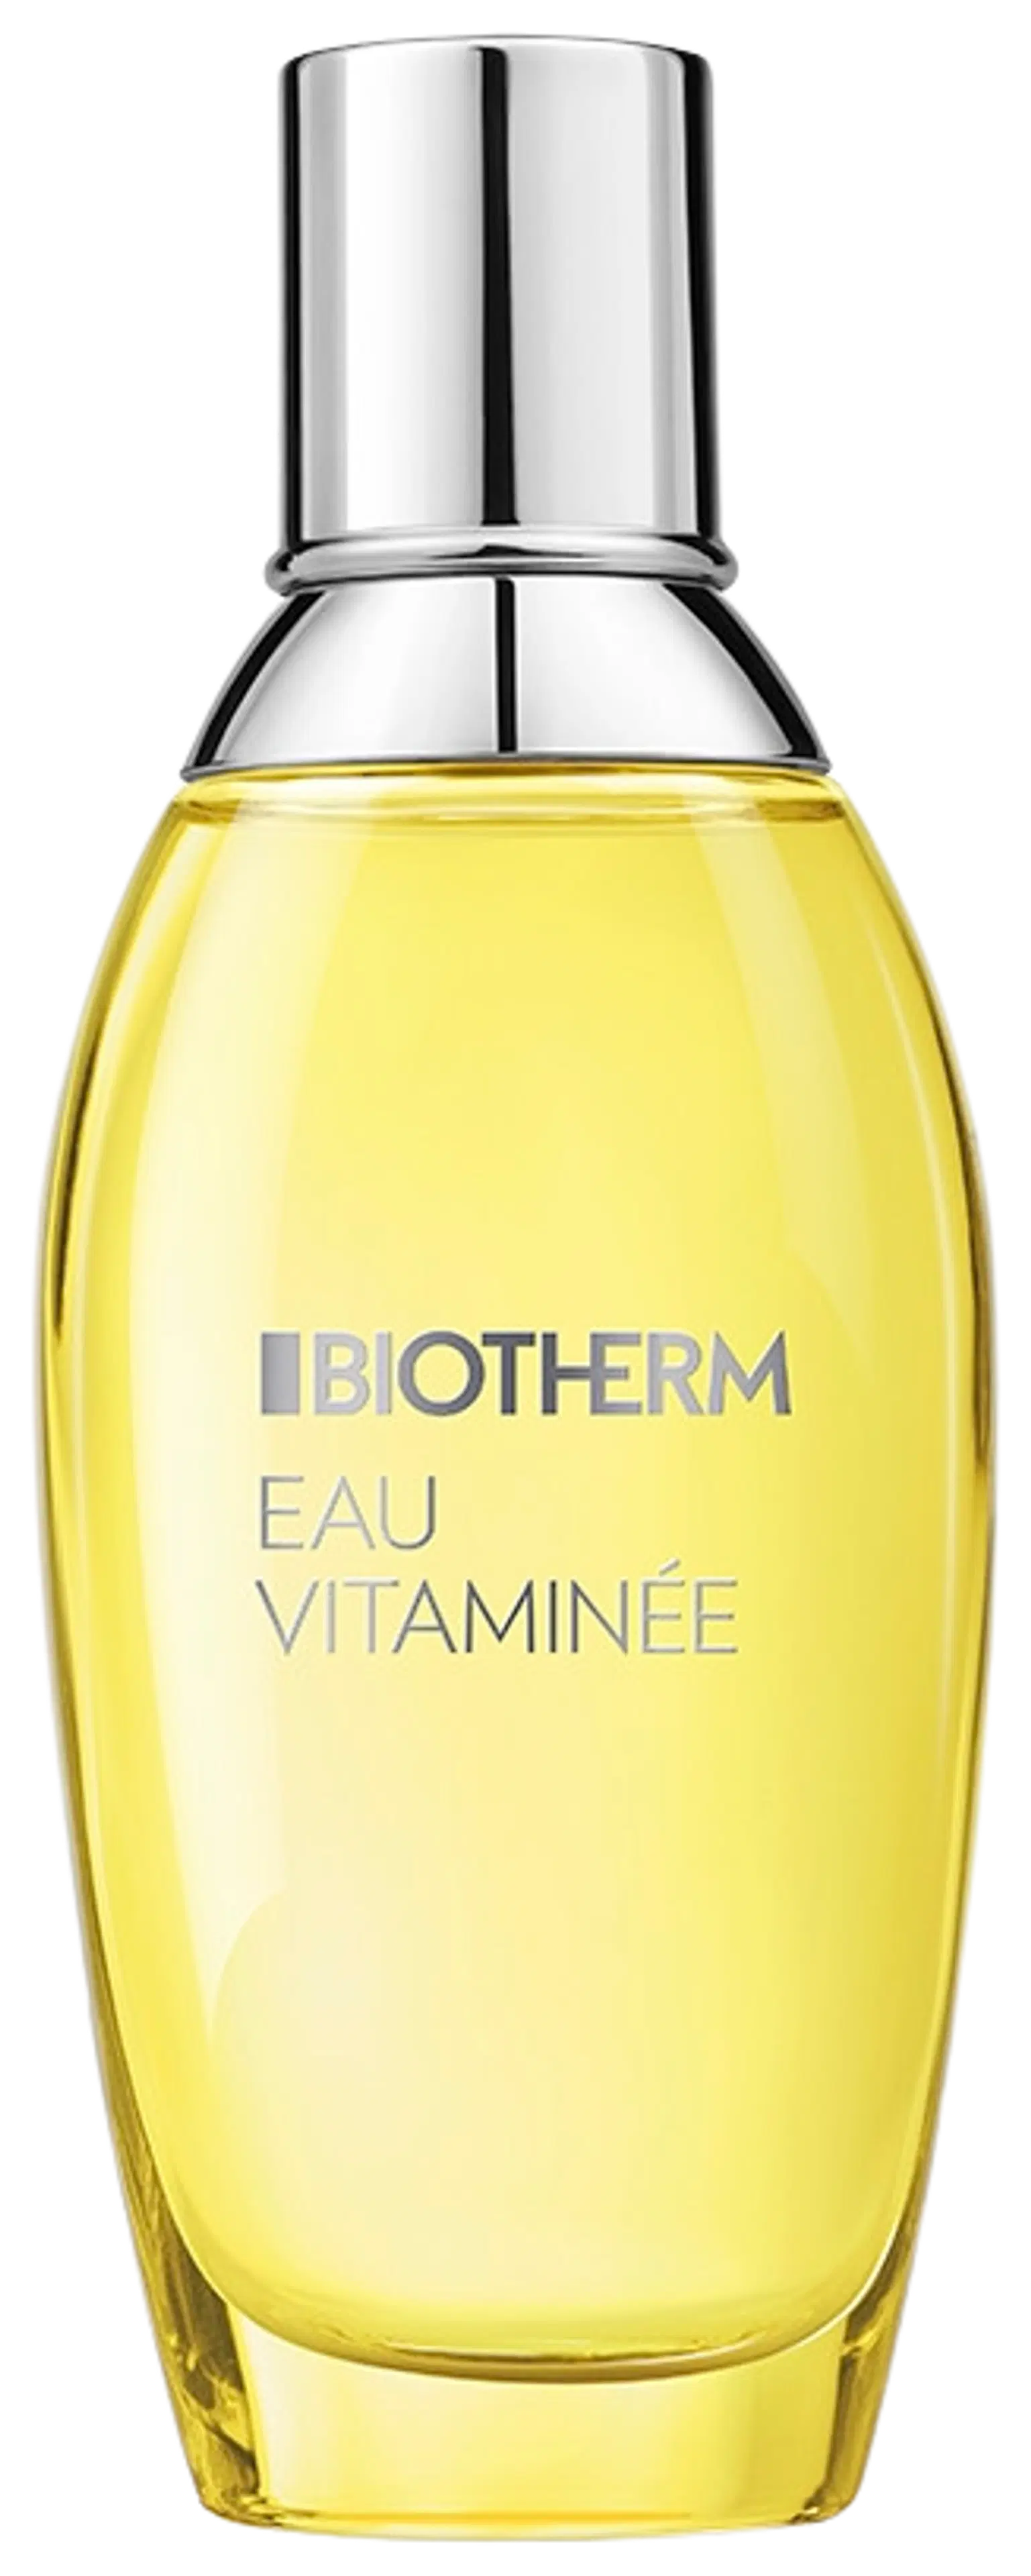 Biotherm Eau Vitaminée EdT vartalotuoksu 50 ml